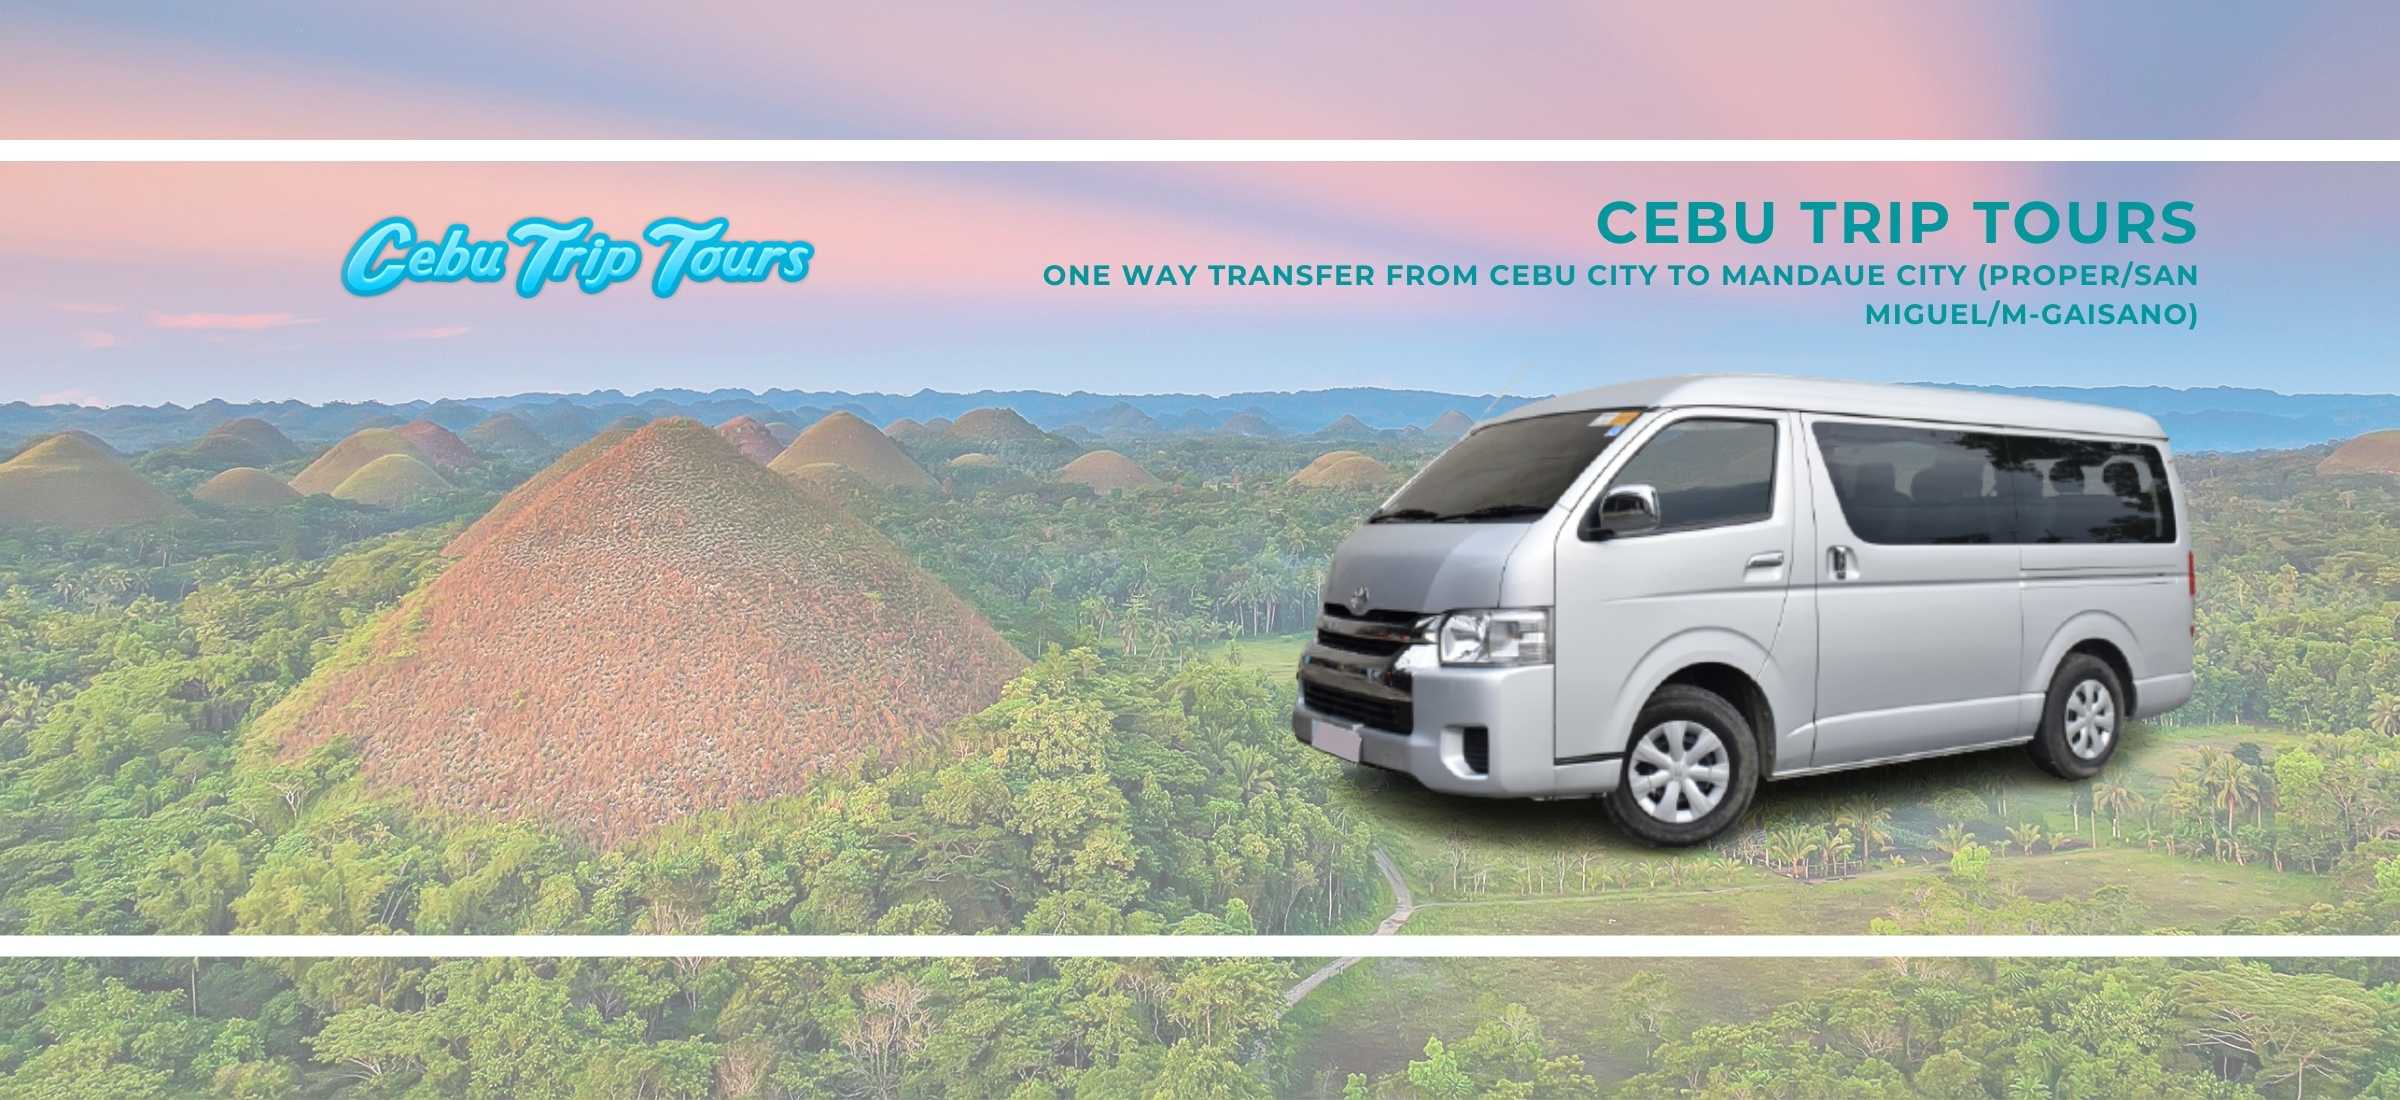 One Way Transfer from Cebu City to Mandaue City (Proper/San Miguel/M-Gaisano)